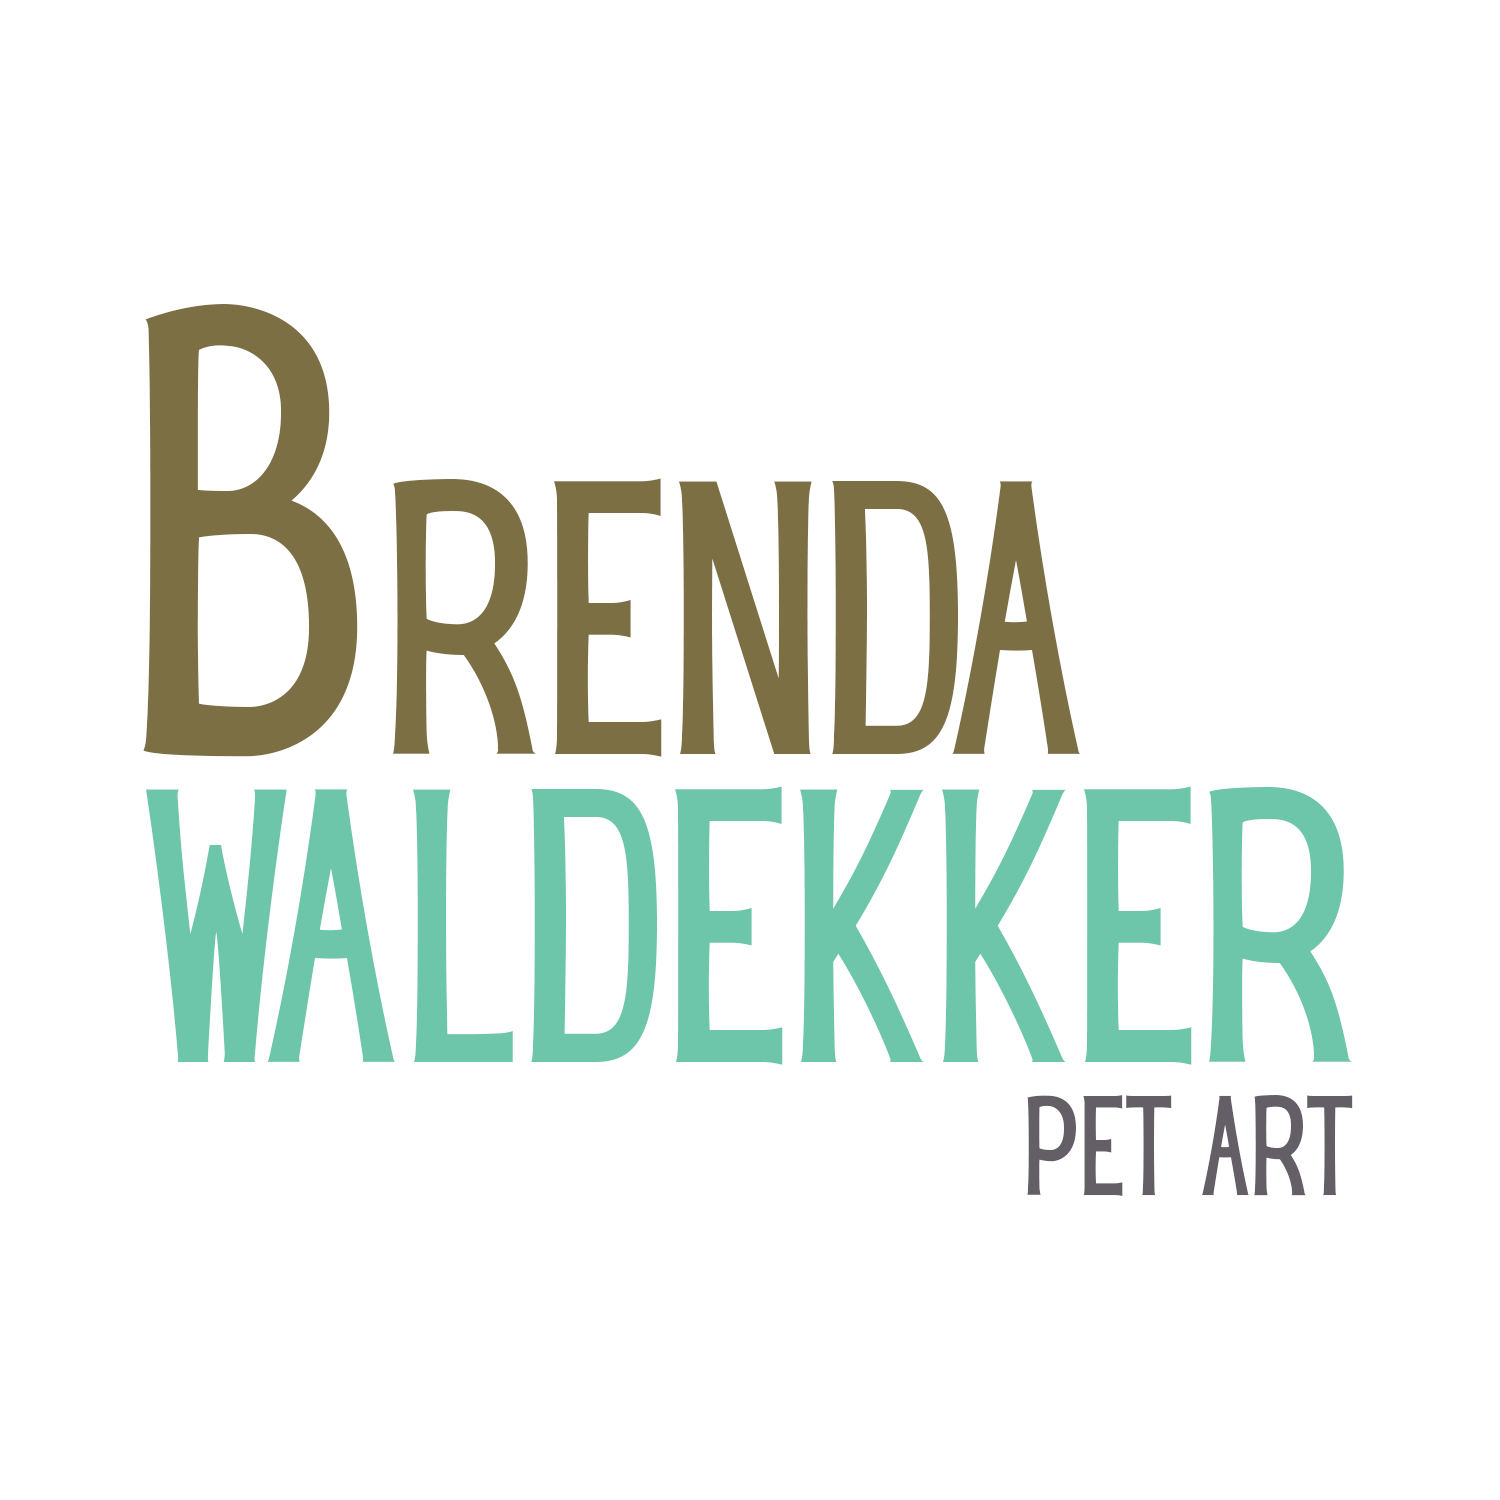 Brenda Waldekker Pet Art logo